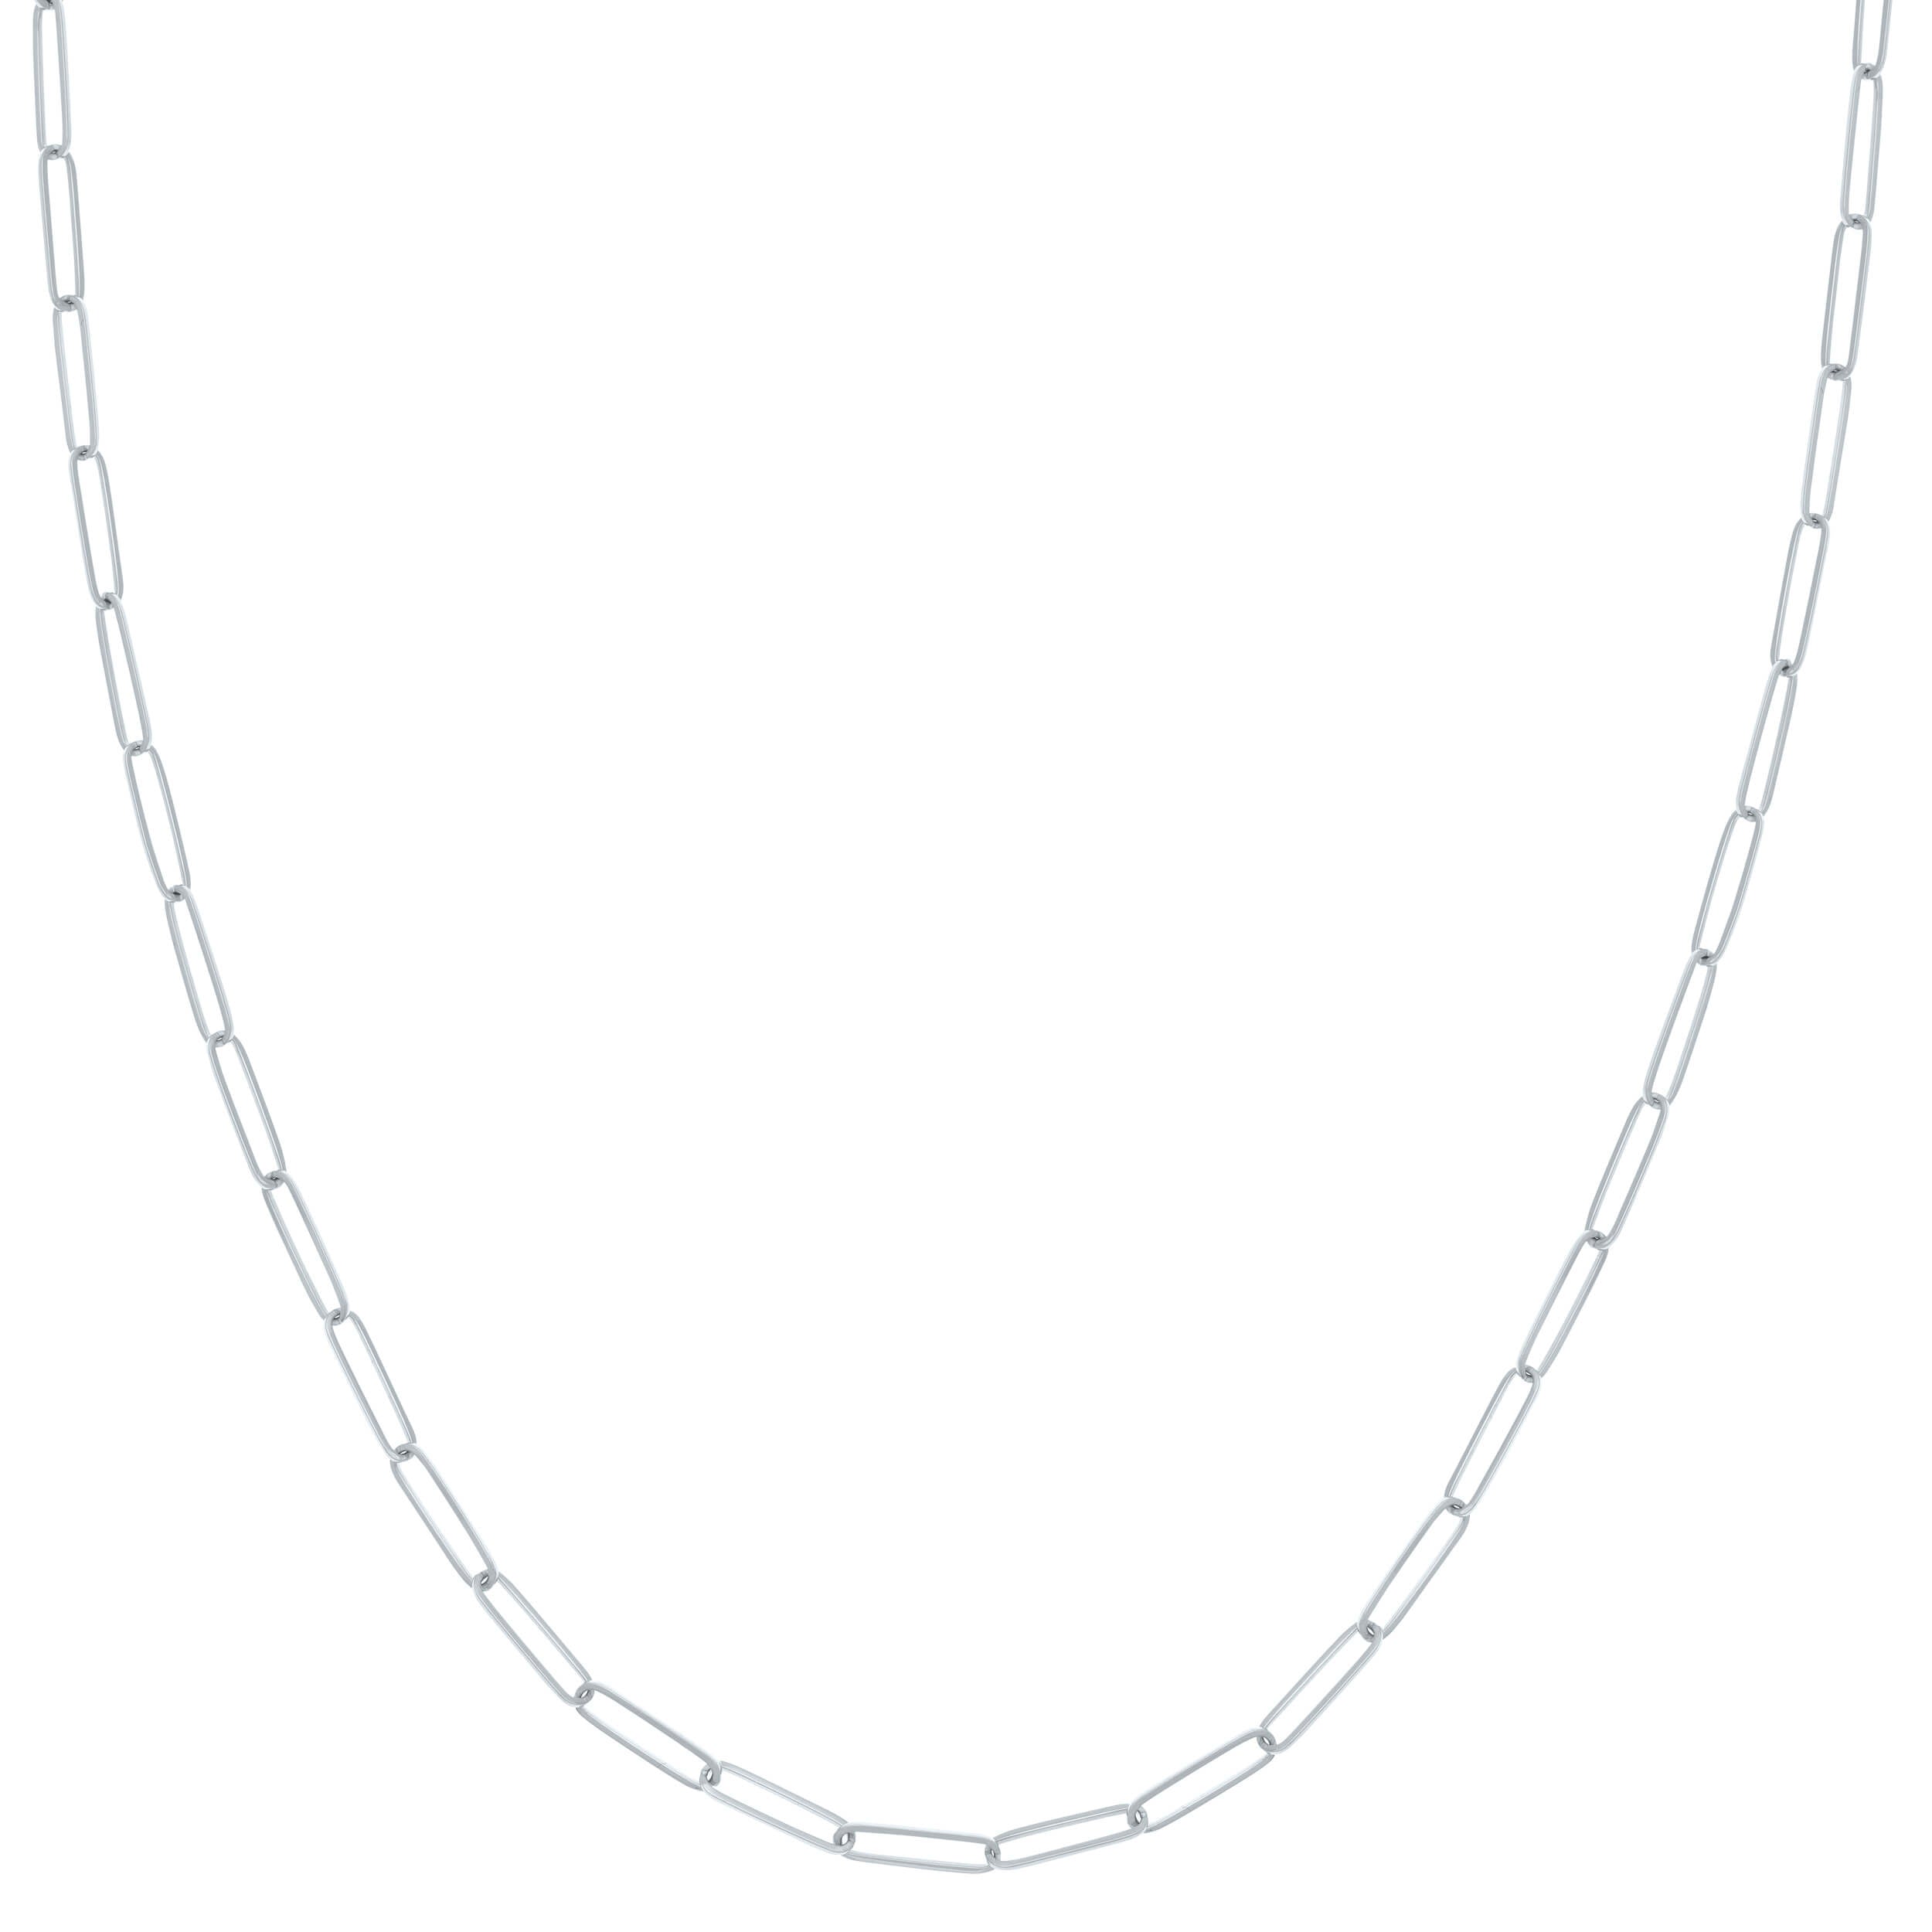 Paperclip Chain Necklace - Small (Silver) | chic jewelry, simple jewelry,  dainty jewelry, minimalistic jewelry, gold jewelry